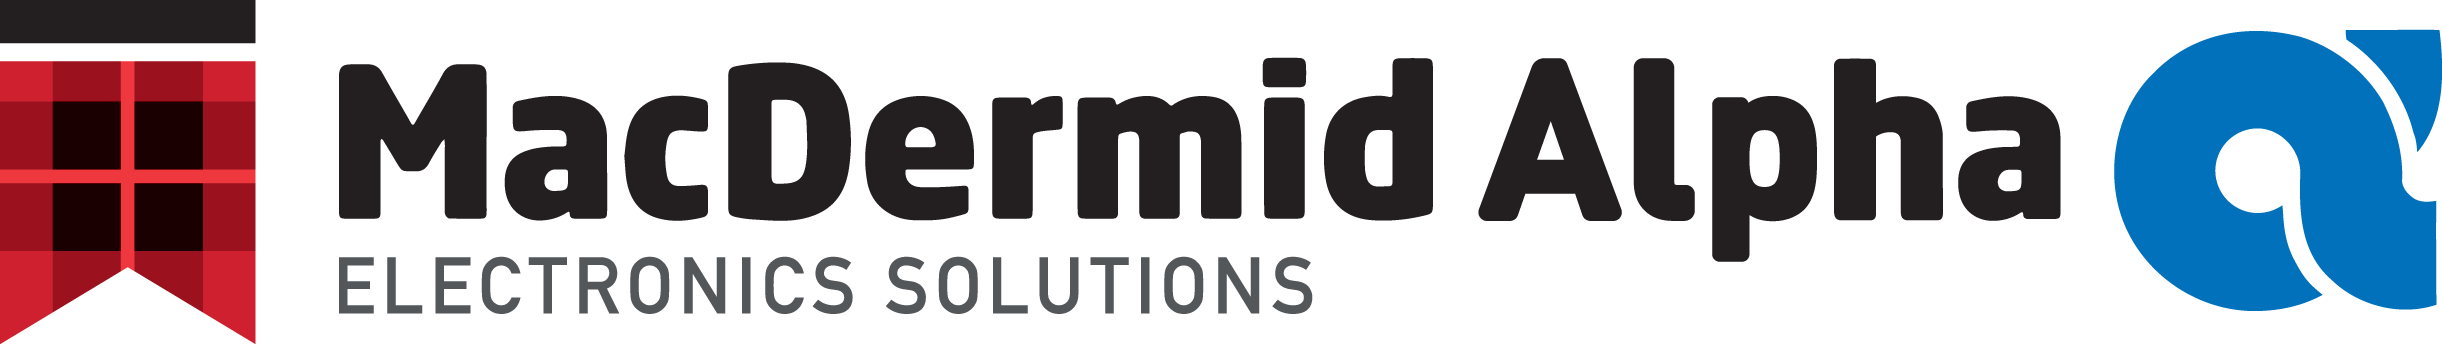 MacDermid-Enthone-Electronics-Solutions-black-logo.png